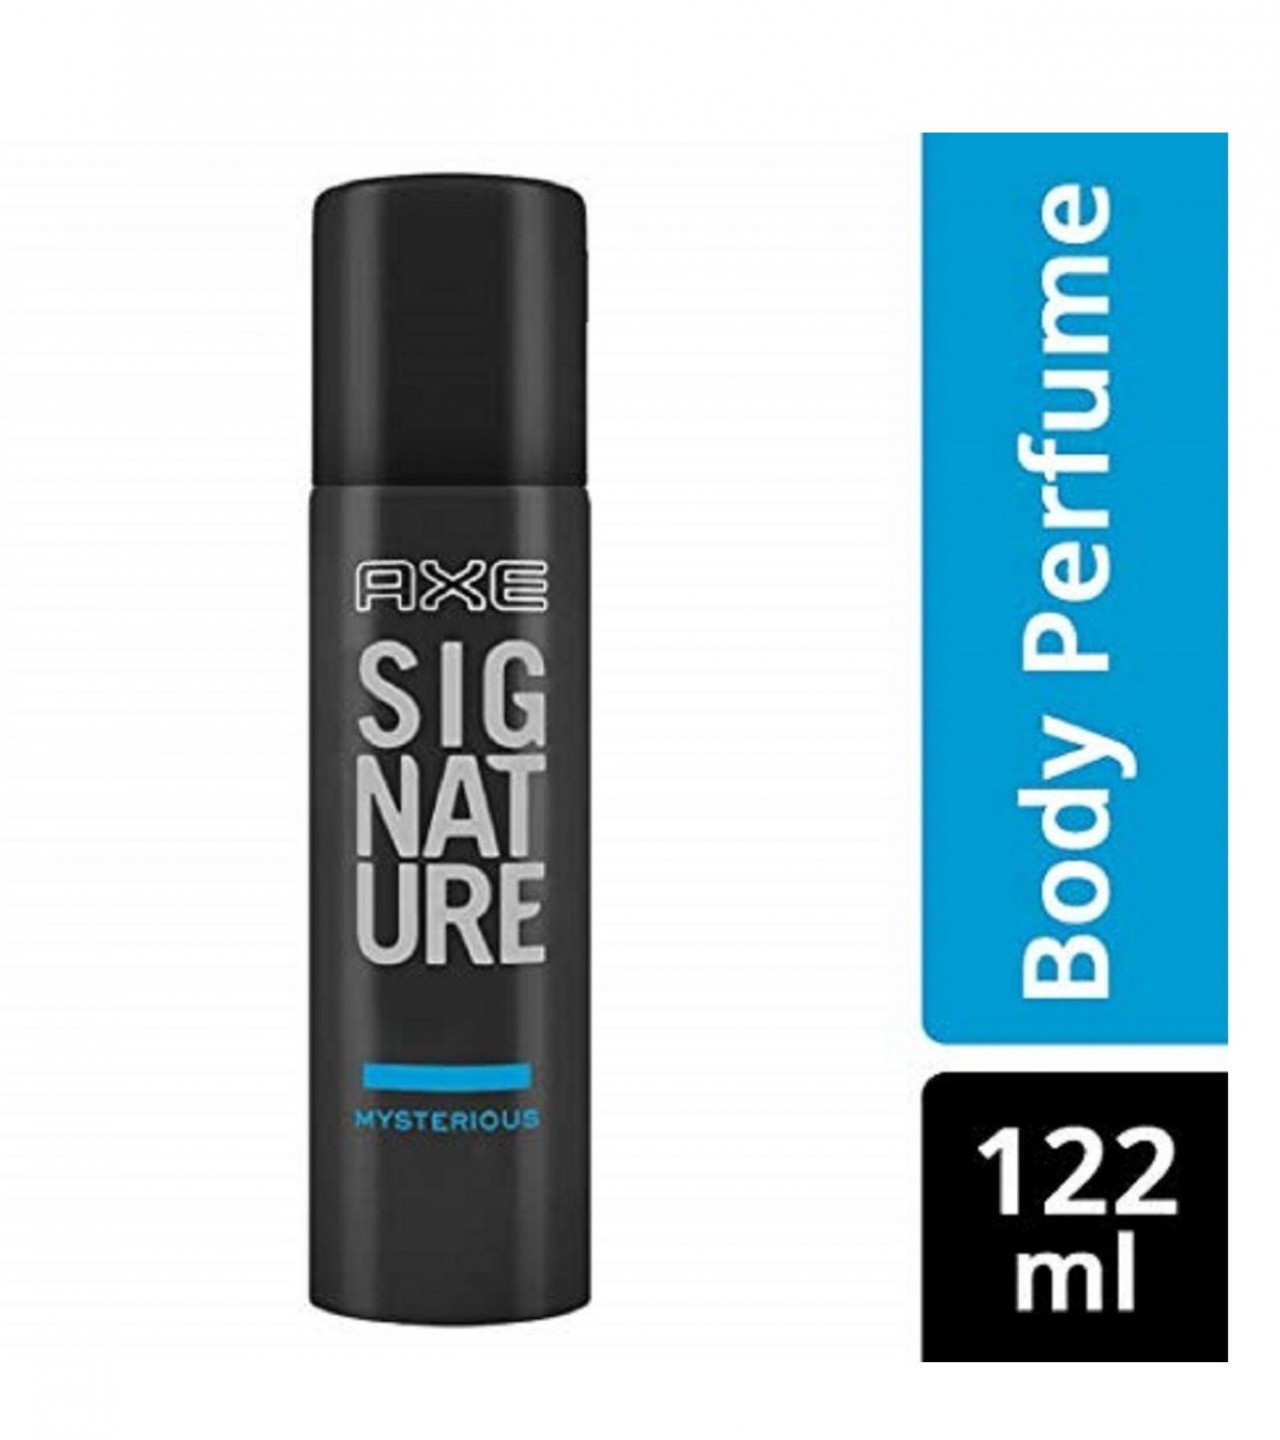 Axe Signature Mysterious Perfume Body Spray For Men - 122 ml